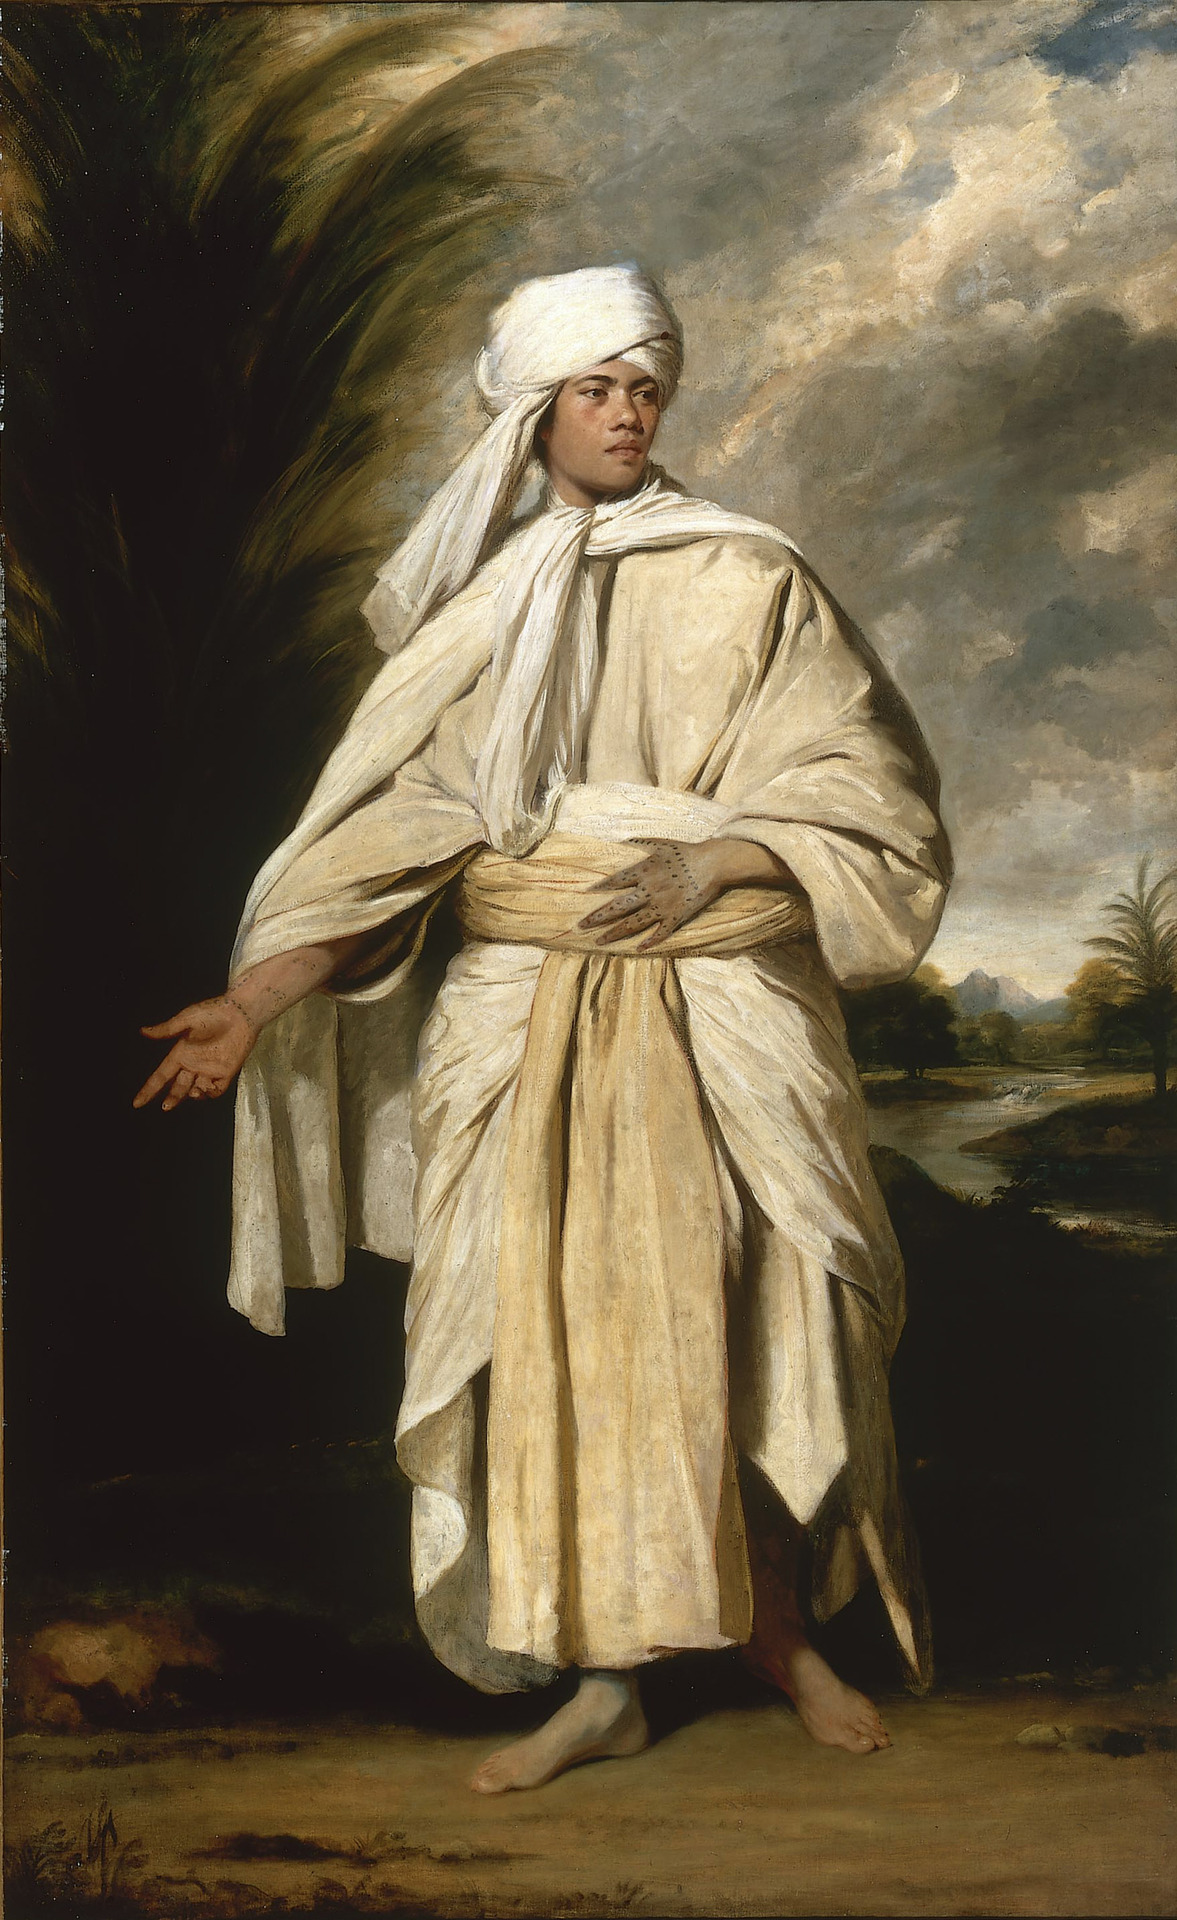 A full-body portrait of a man in a classical landscape